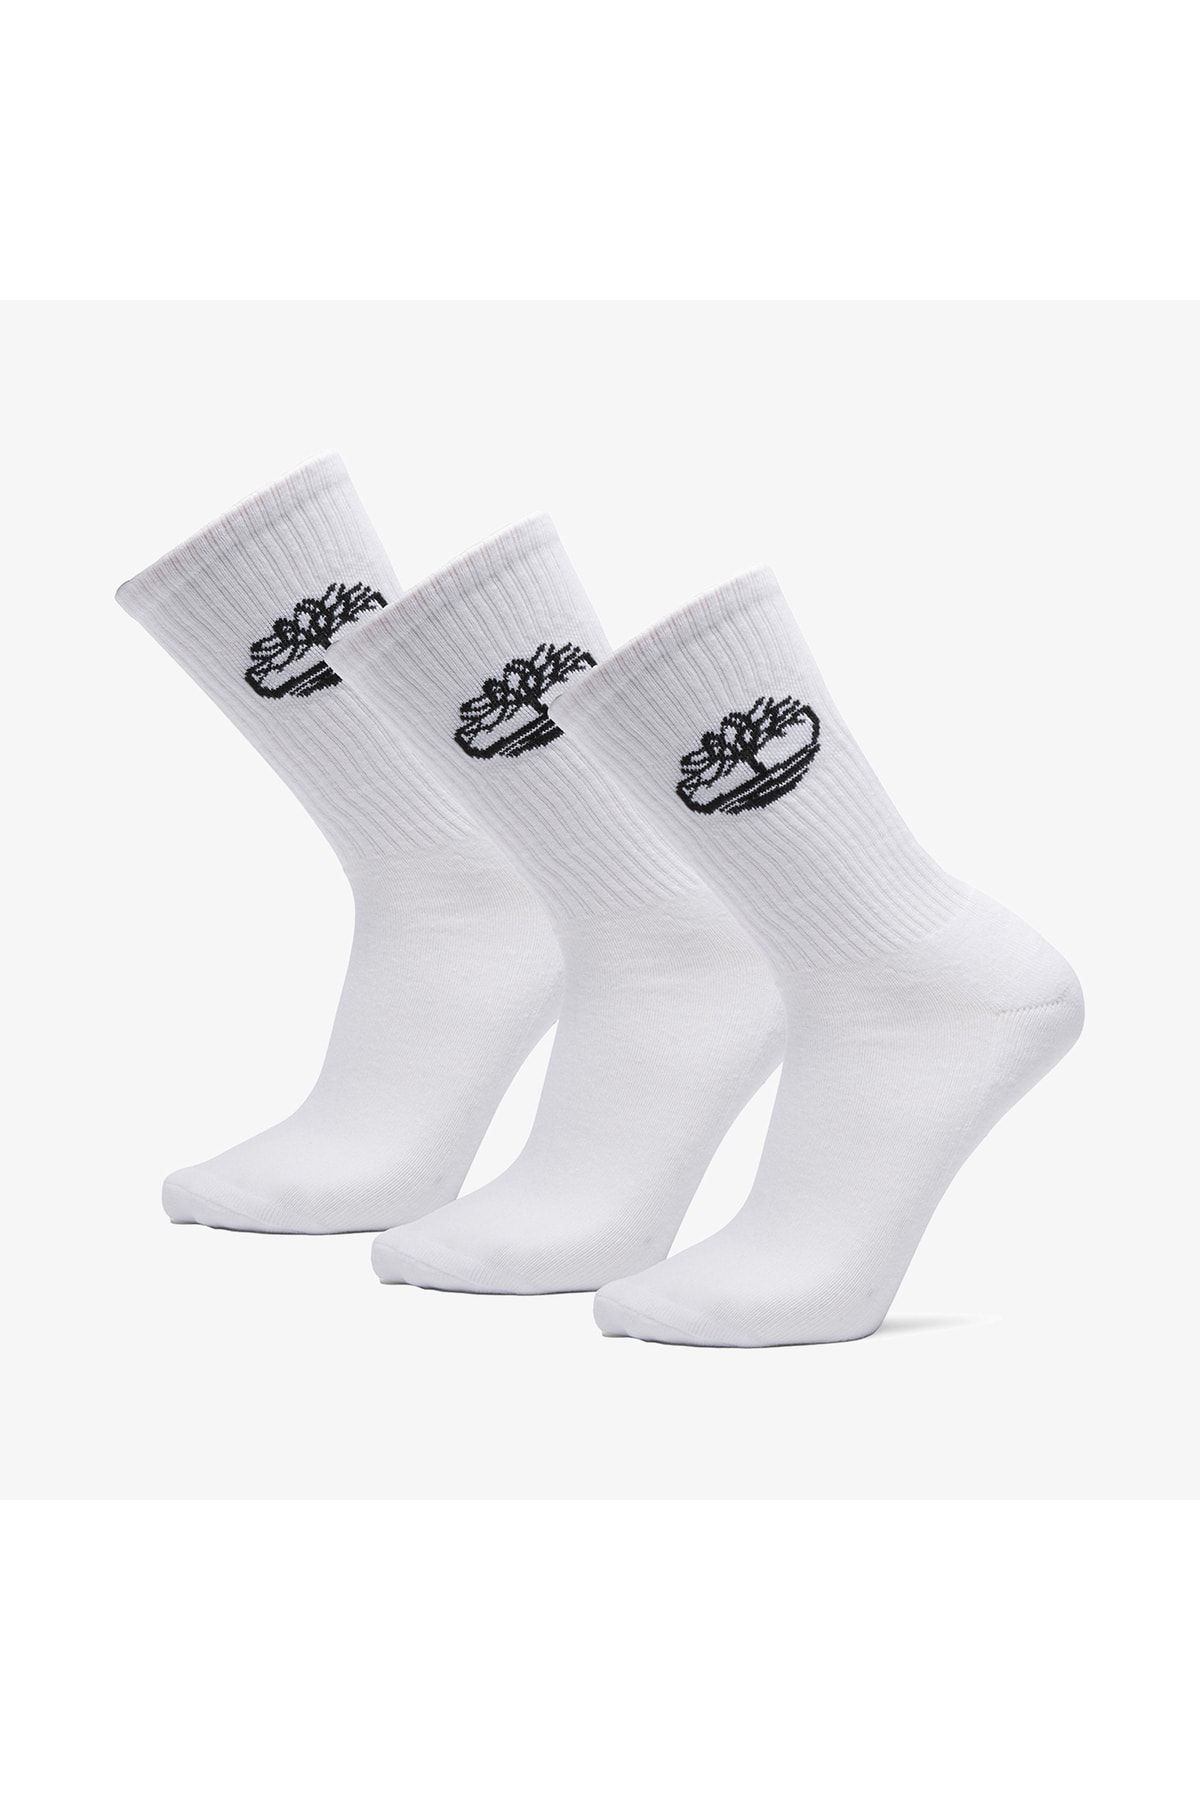 Timberland 3pp Core Double Logo Sport Crew Socks - White